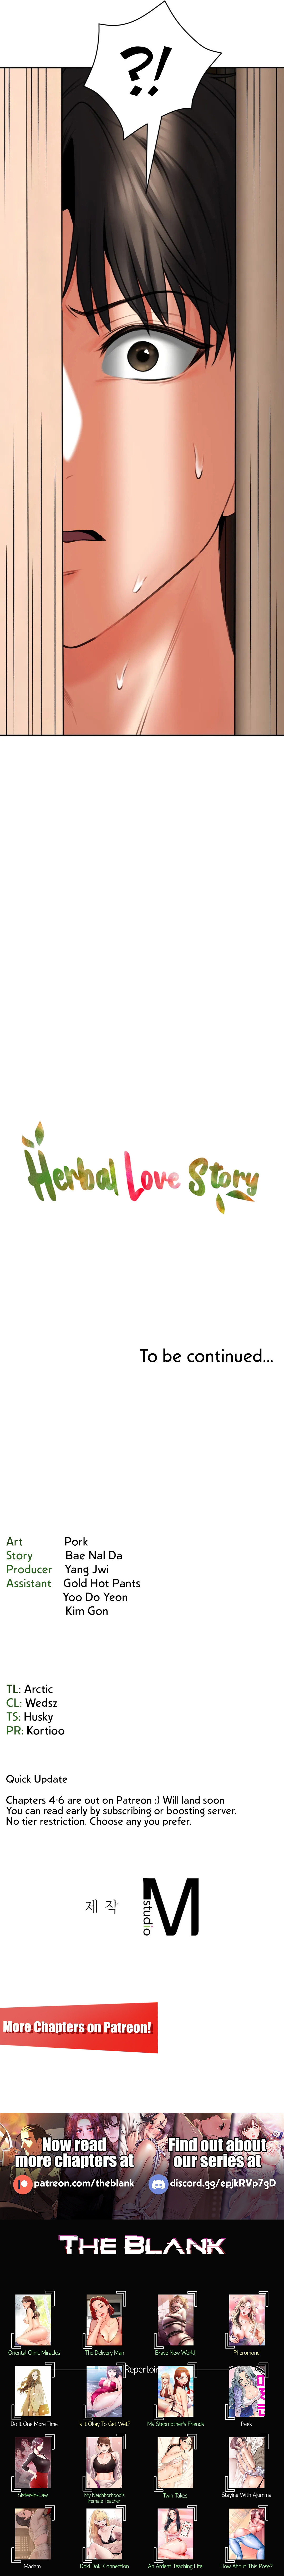 Herbal Love Story NEW image